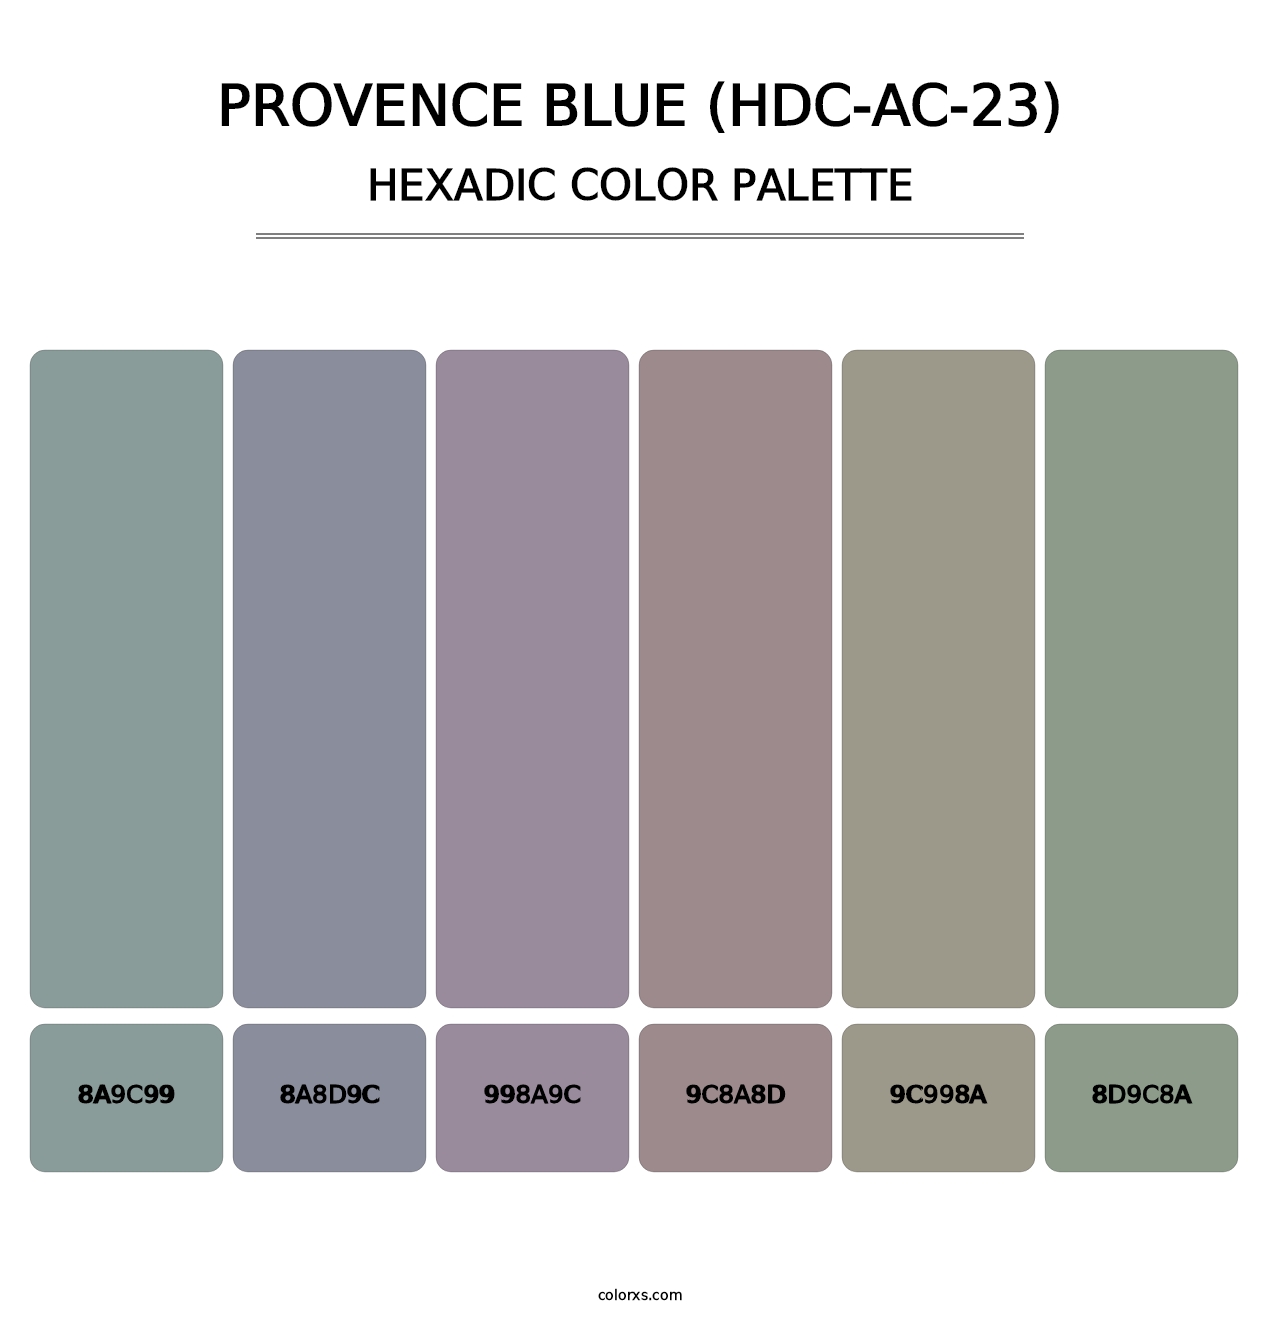 Provence Blue (HDC-AC-23) - Hexadic Color Palette